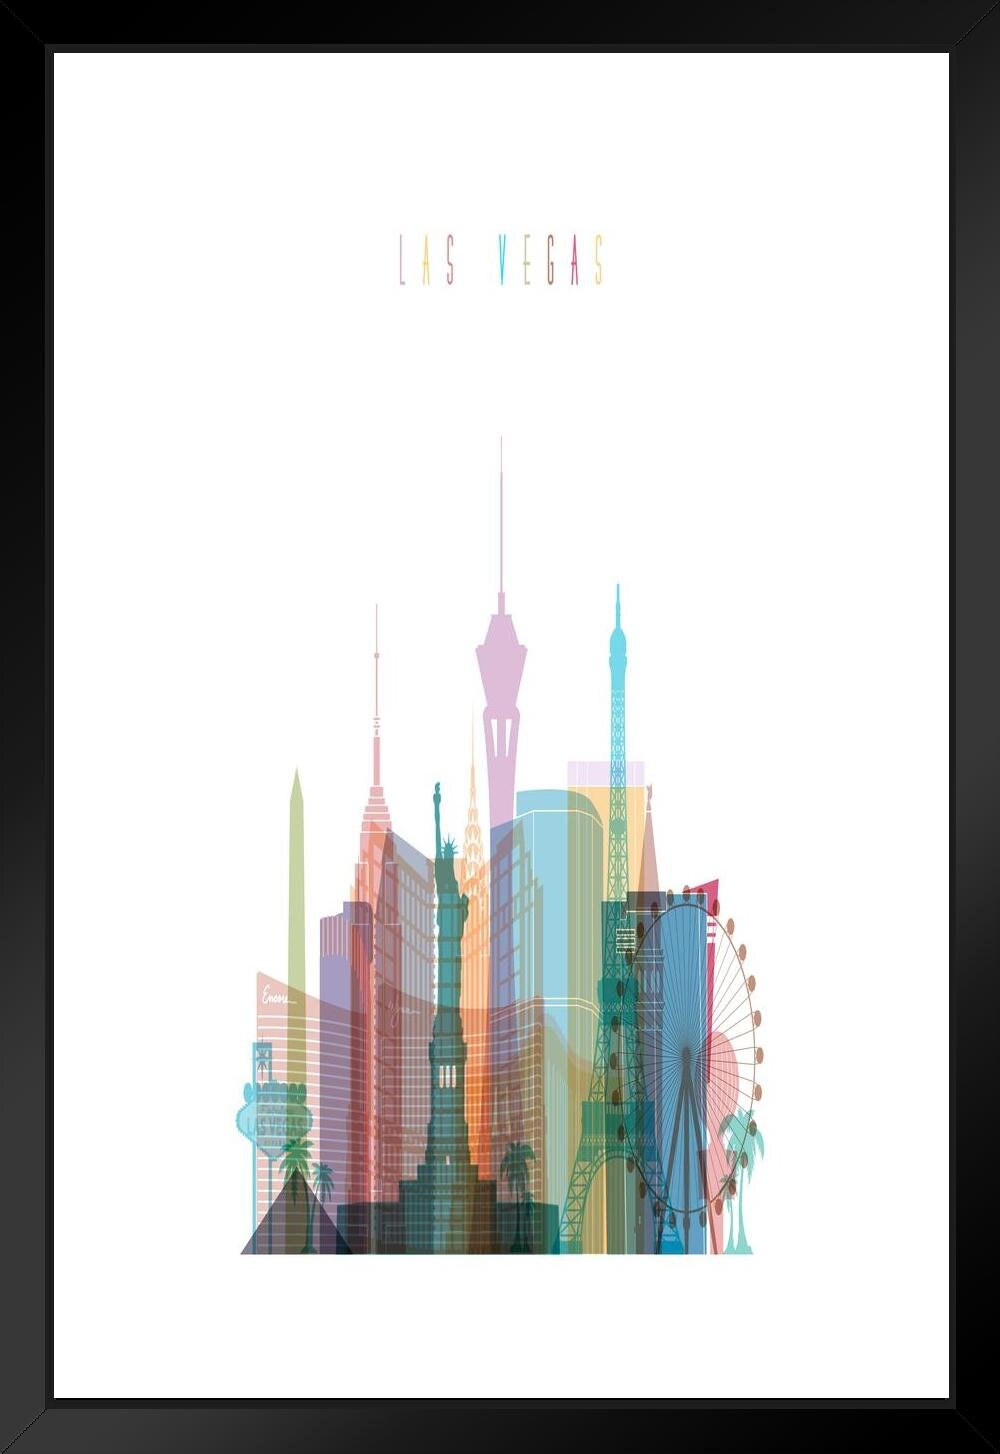 Las Vegas, Nevada - Retro Skyline (no text) - Lantern Press Poster